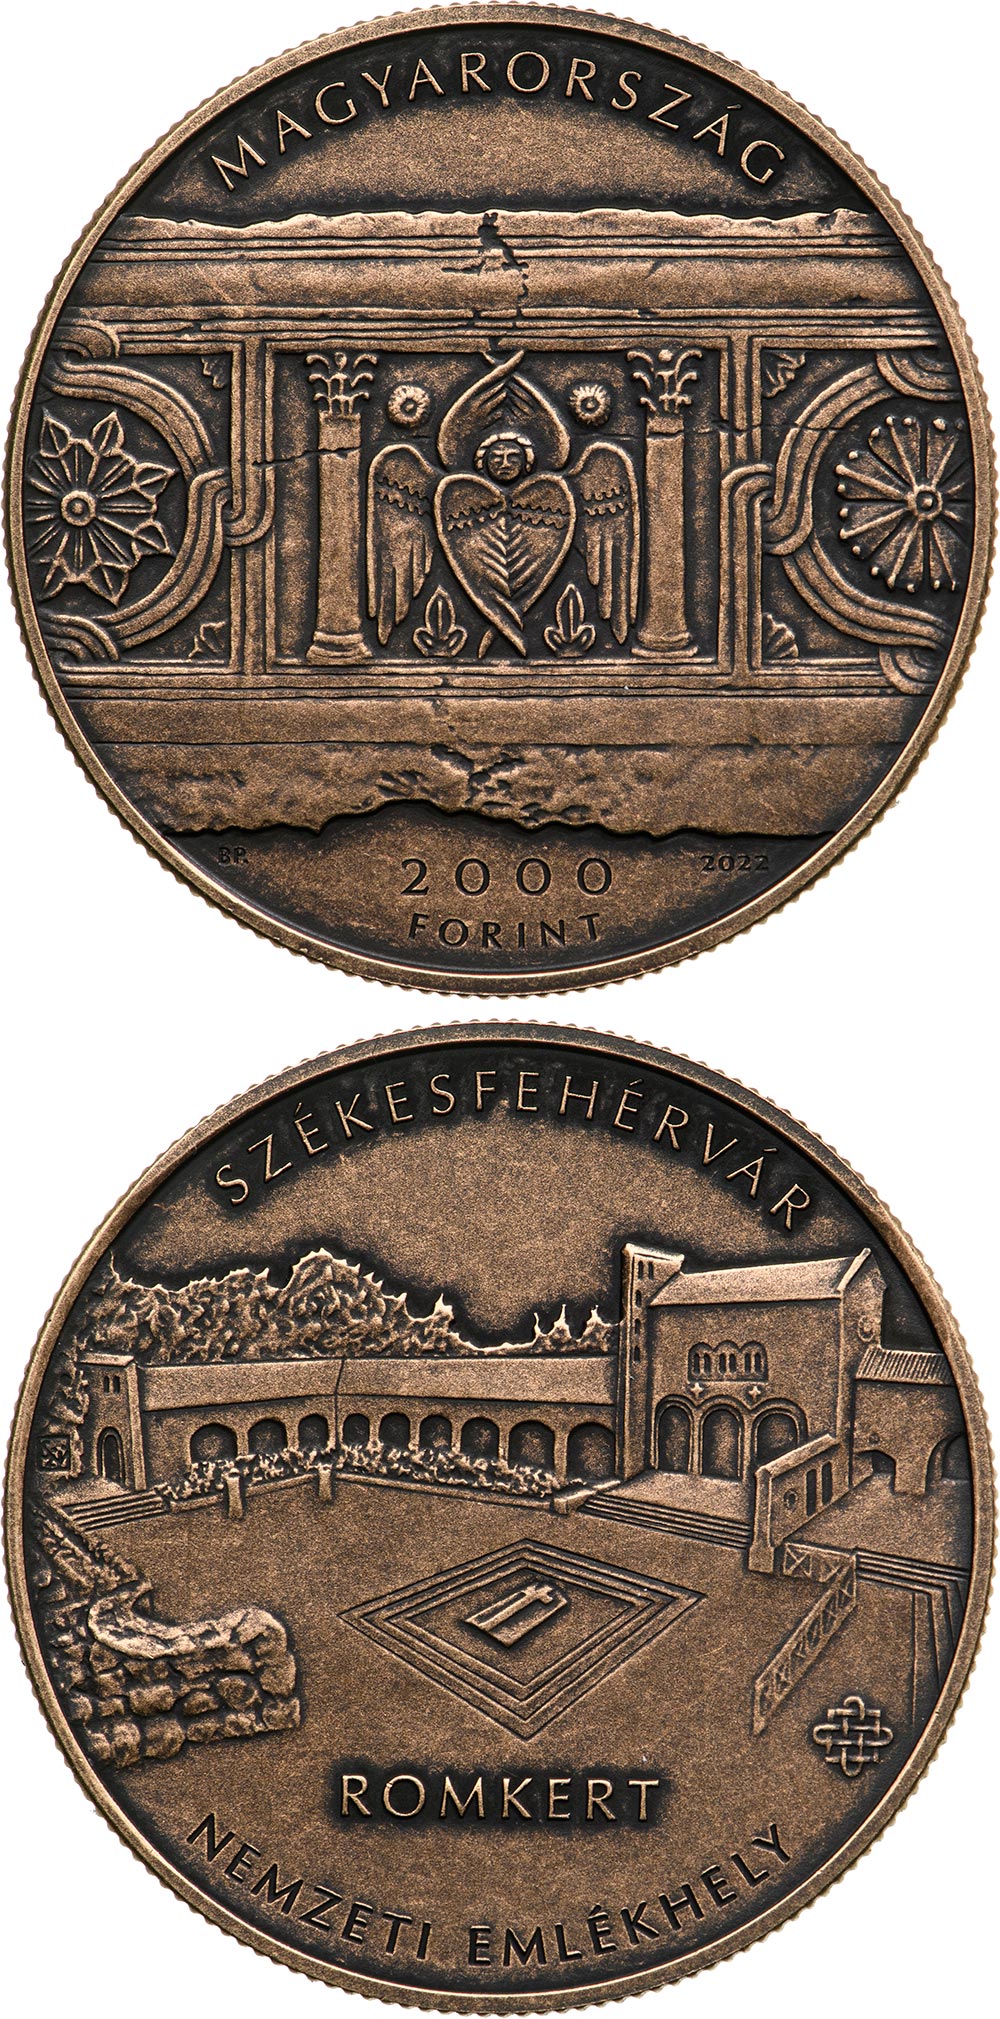 Image of 2000 forint coin - Székesfehérvár, Romkert | Hungary 2022.  The Brass coin is of BU quality.